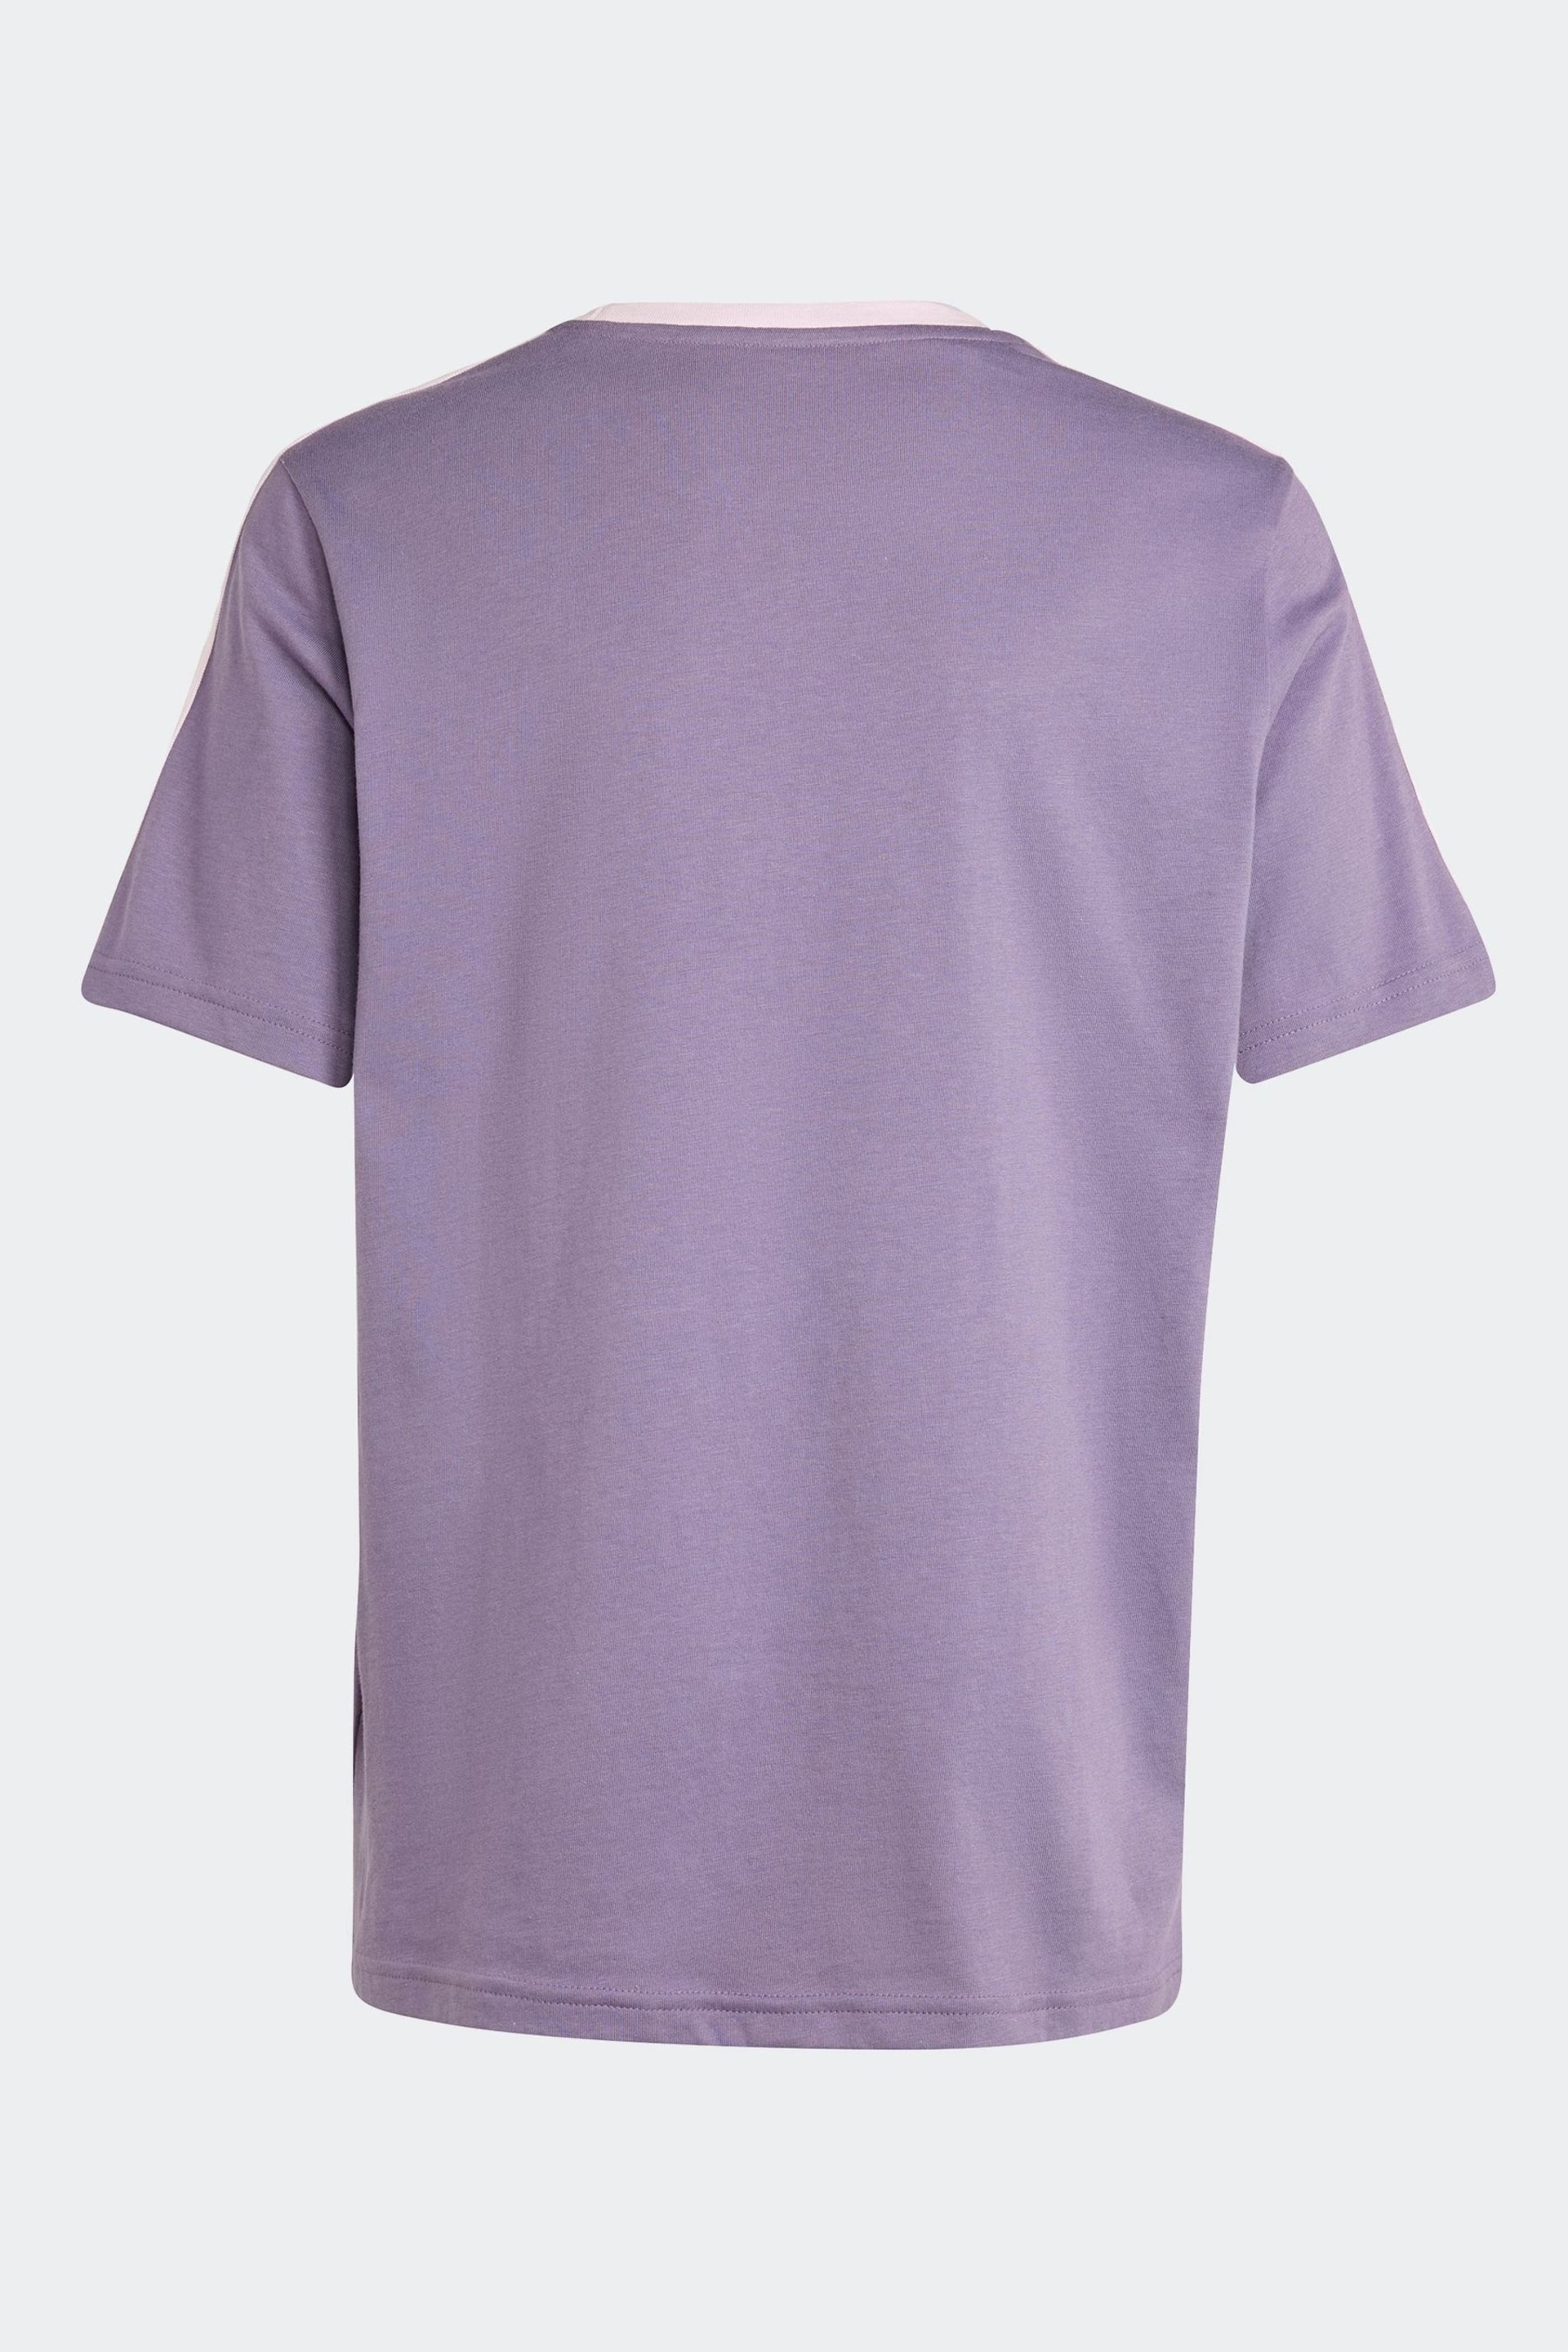 adidas Purple Boyfriend Loose Fit Sportswear Essentials 3-Stripes Cotton T-Shirt - Image 2 of 5